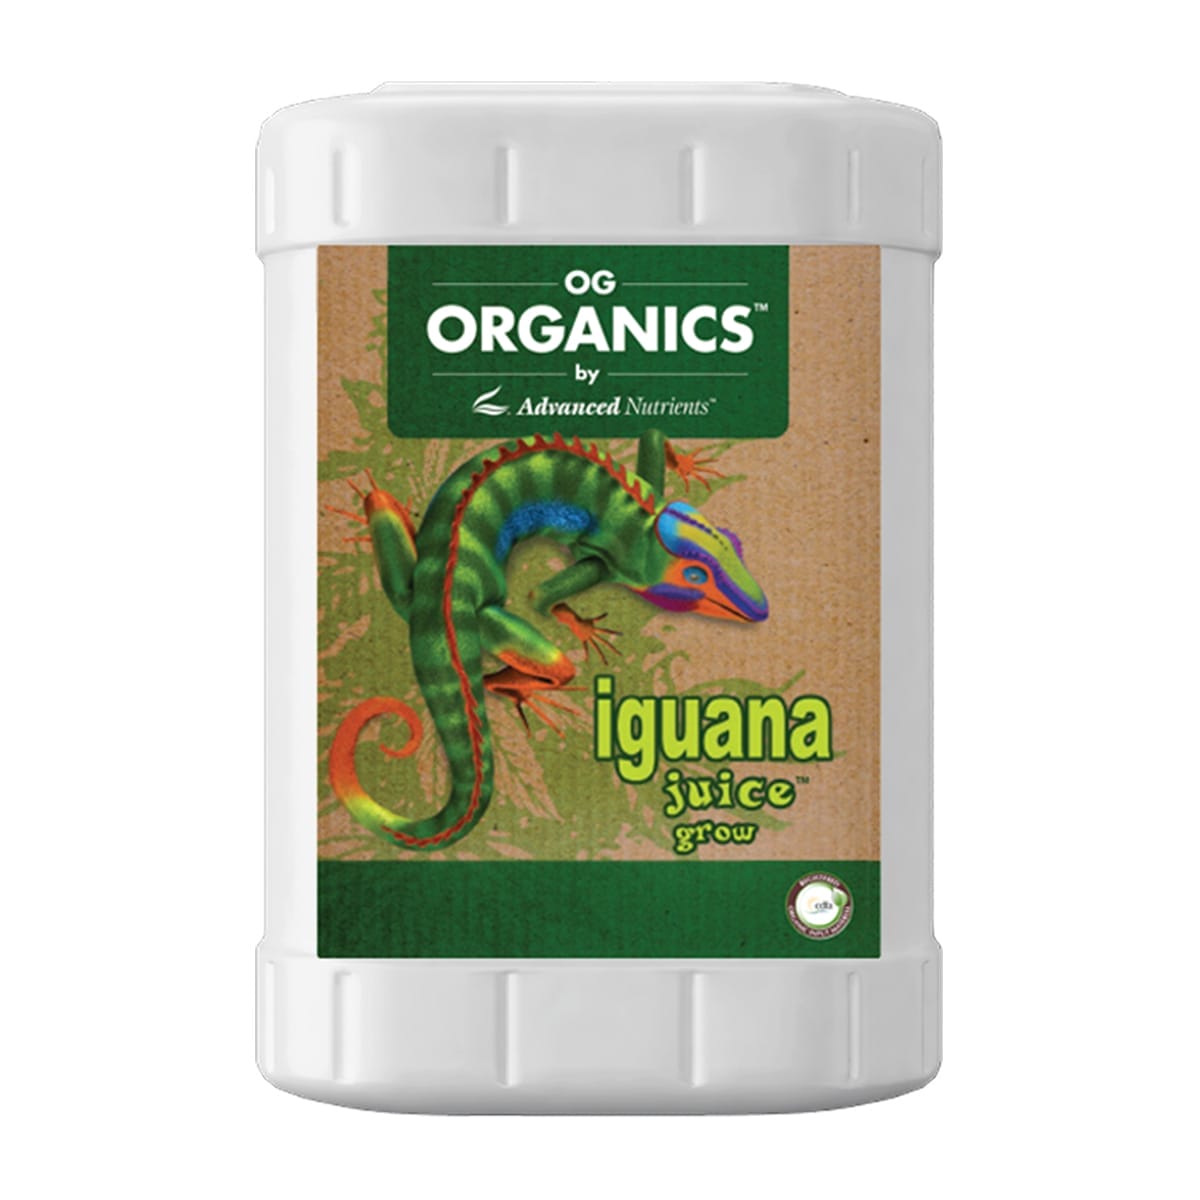 Advanced Nutrients OG Organics Iguana Juice Grow 23L